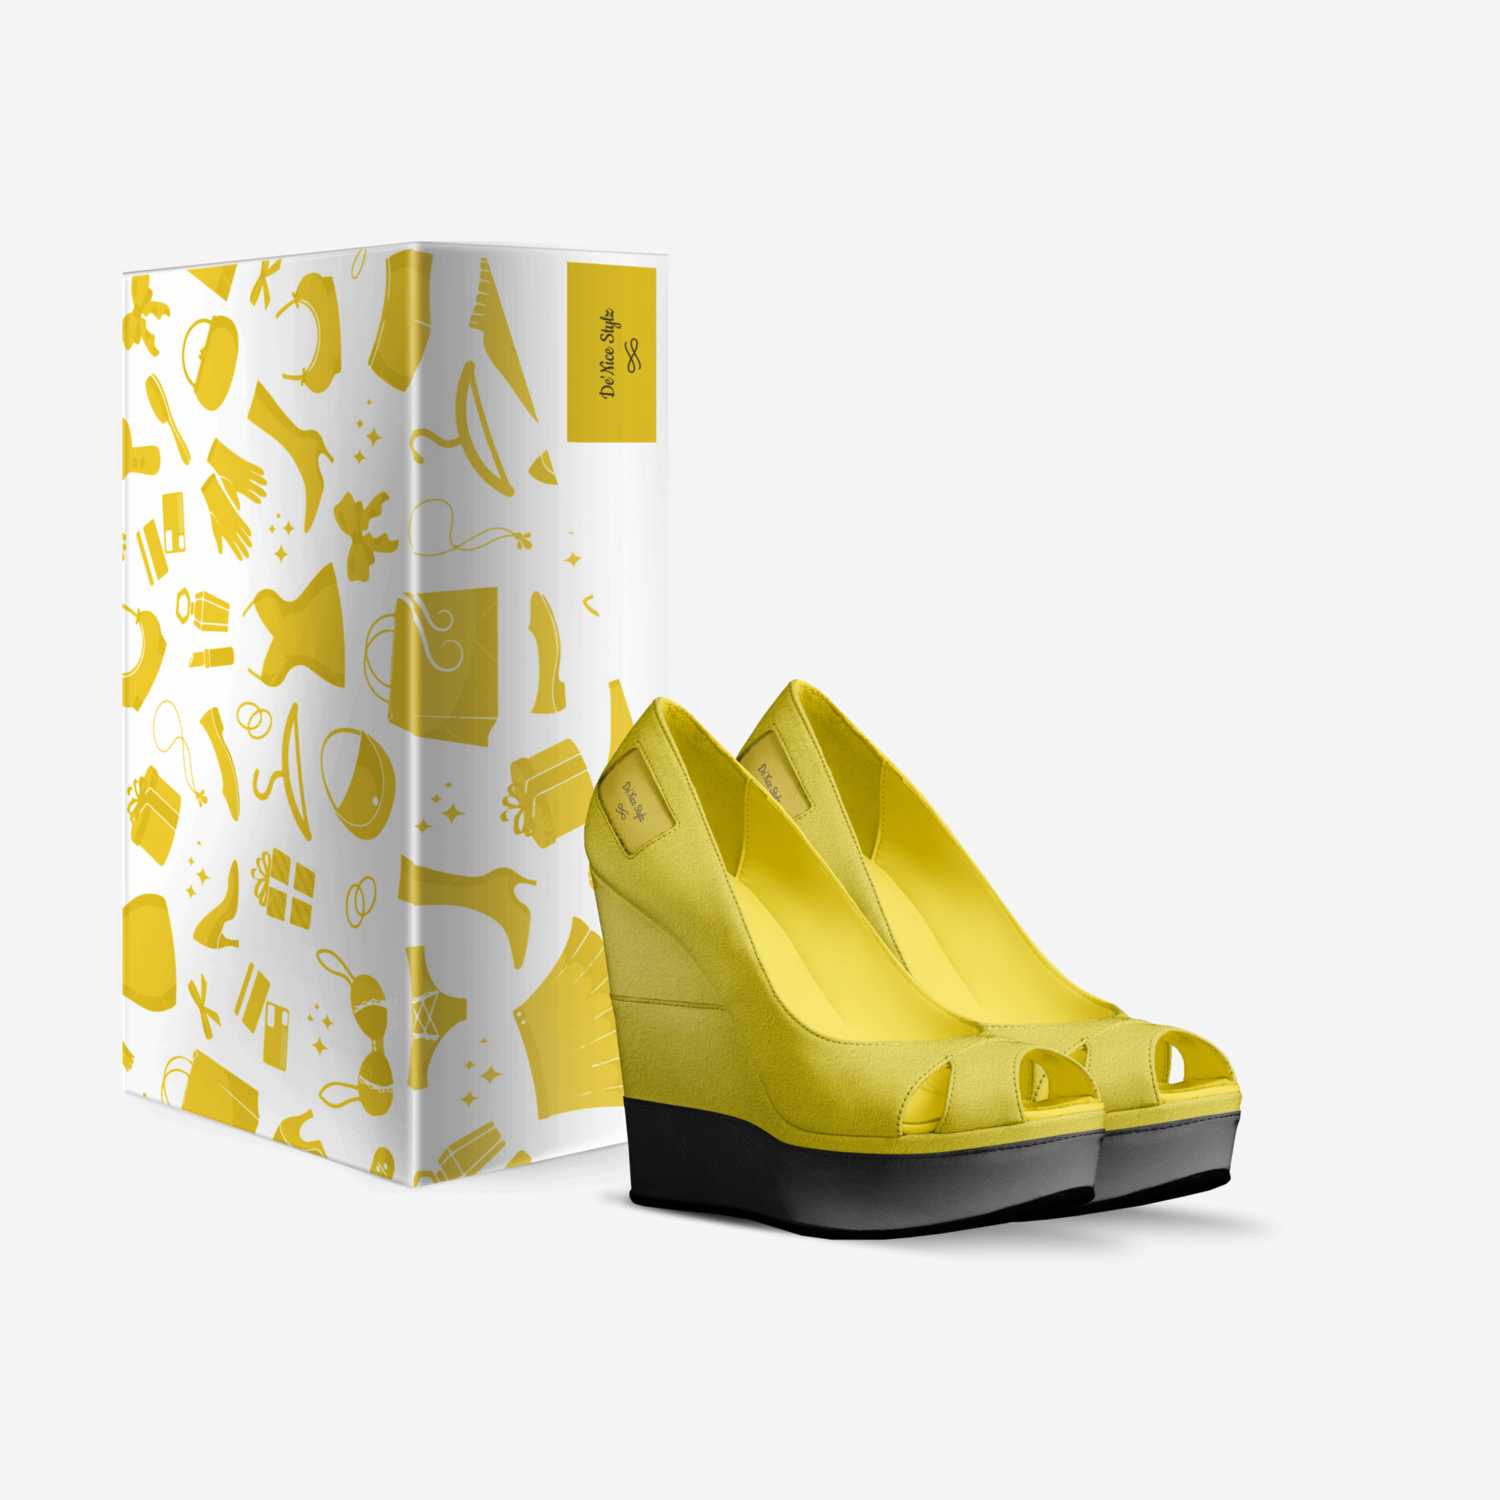 De'Nice Stylz custom made in Italy shoes by Natasha Robinson | Box view